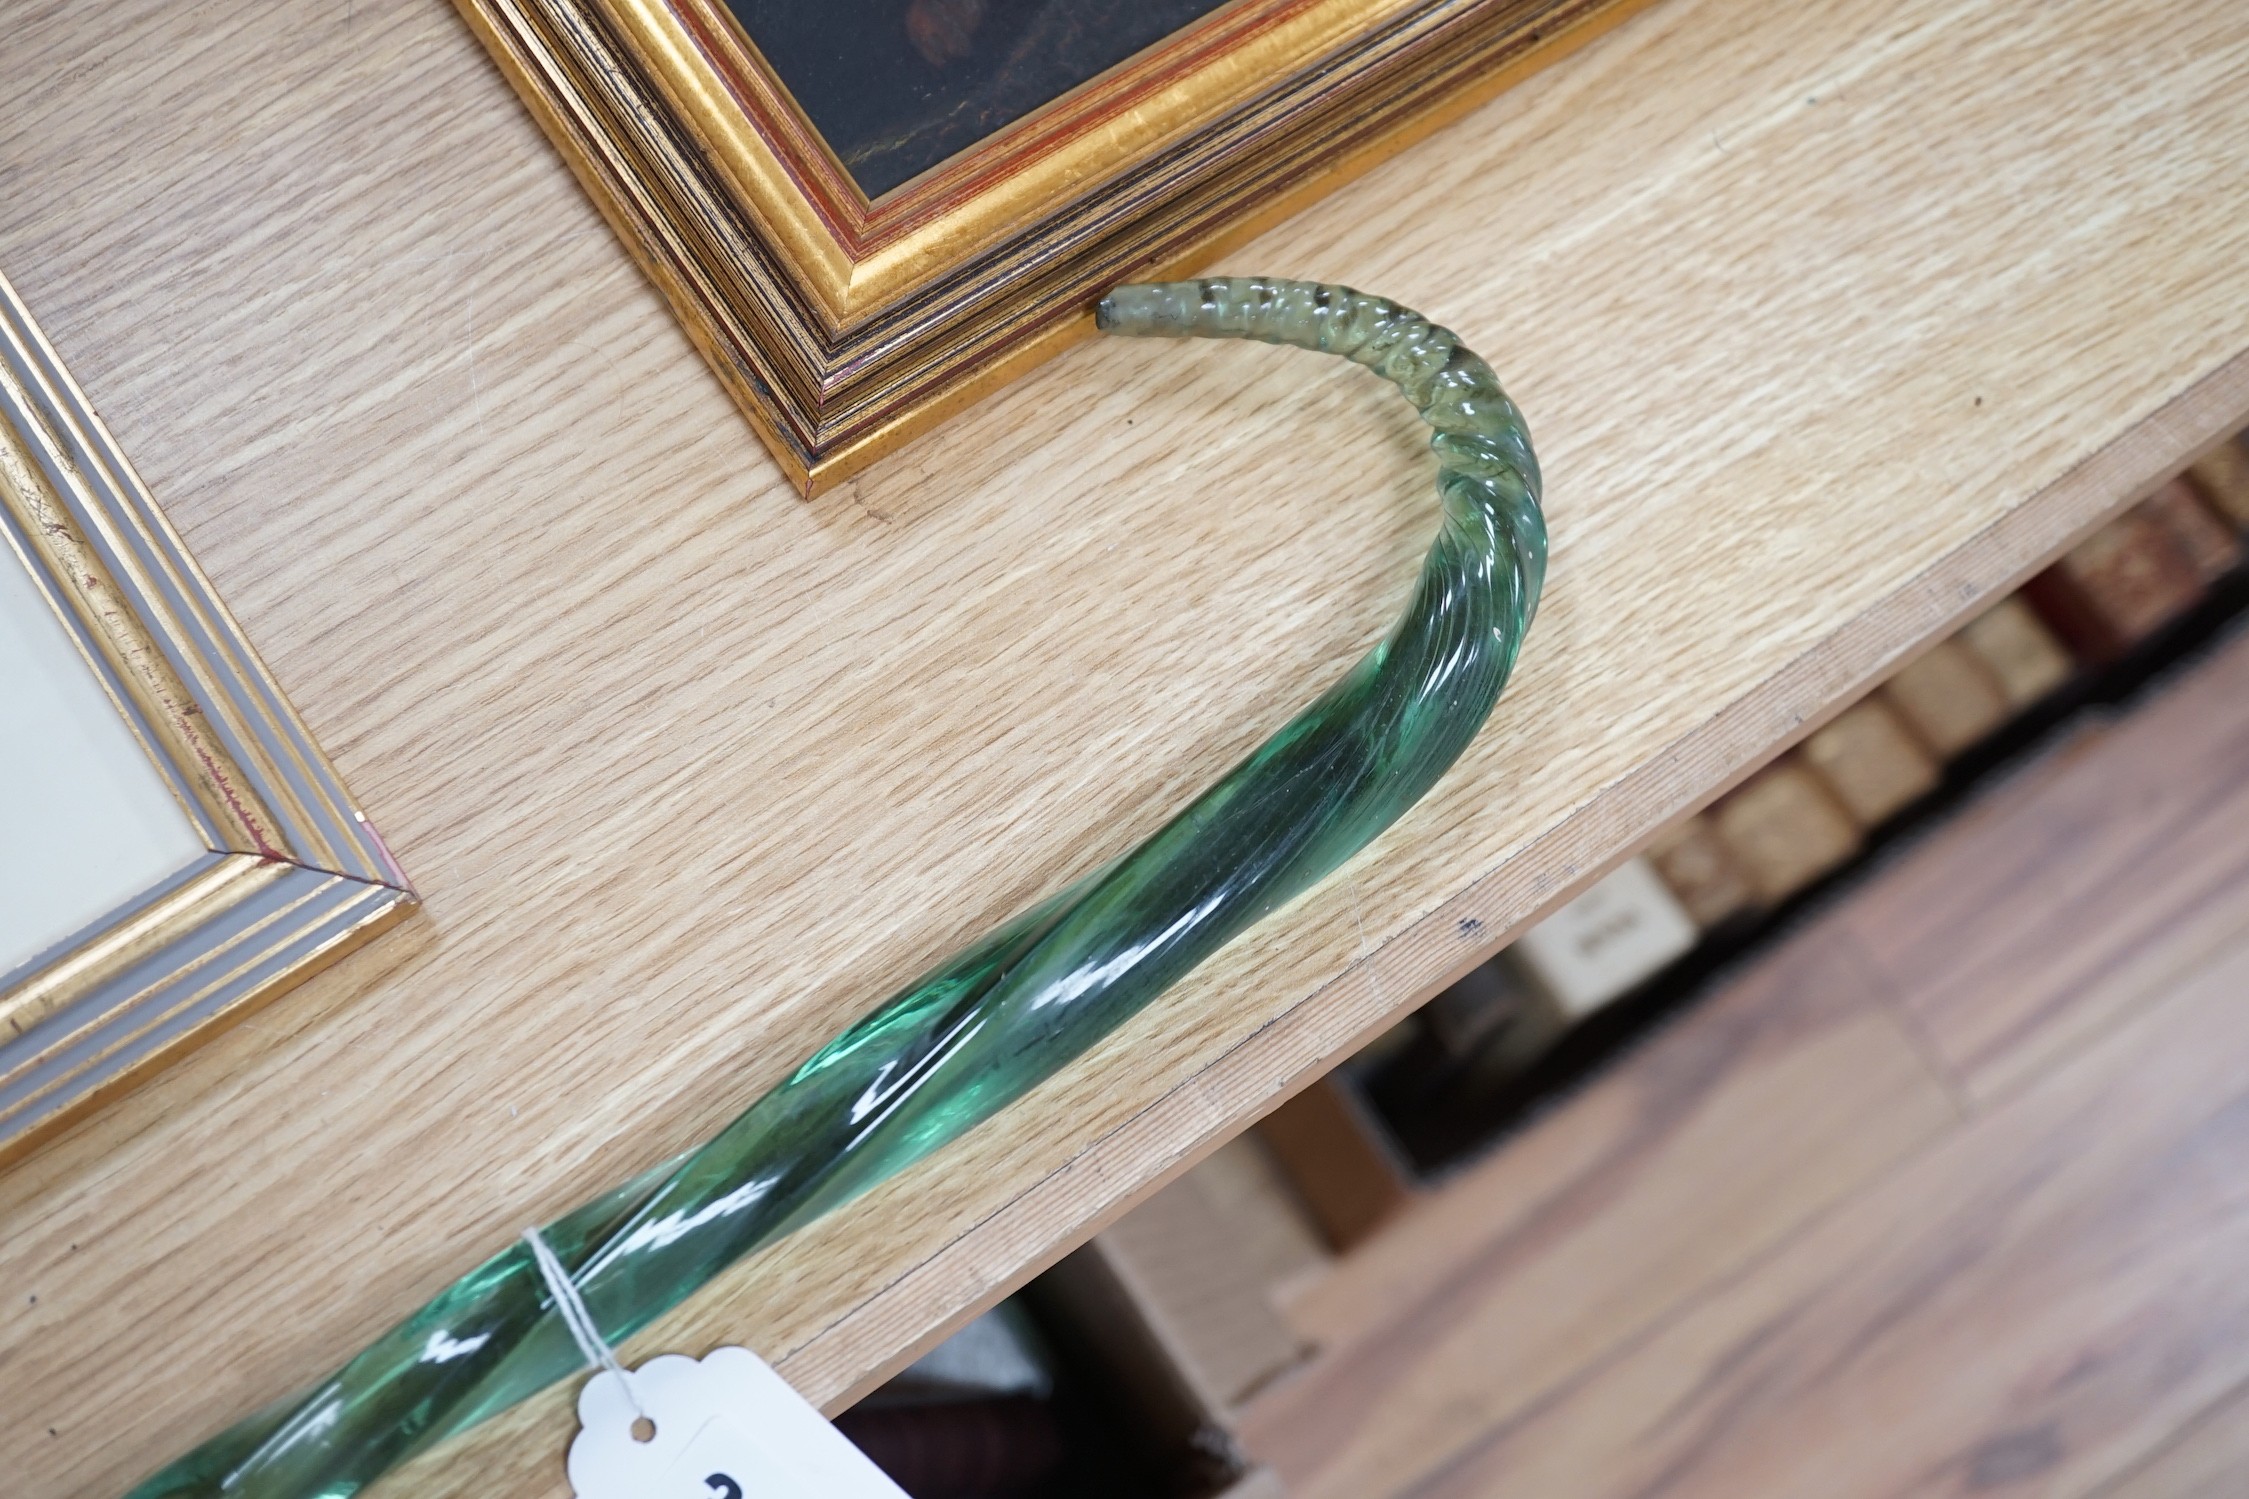 A Victorian green glass walking stick, 107cm